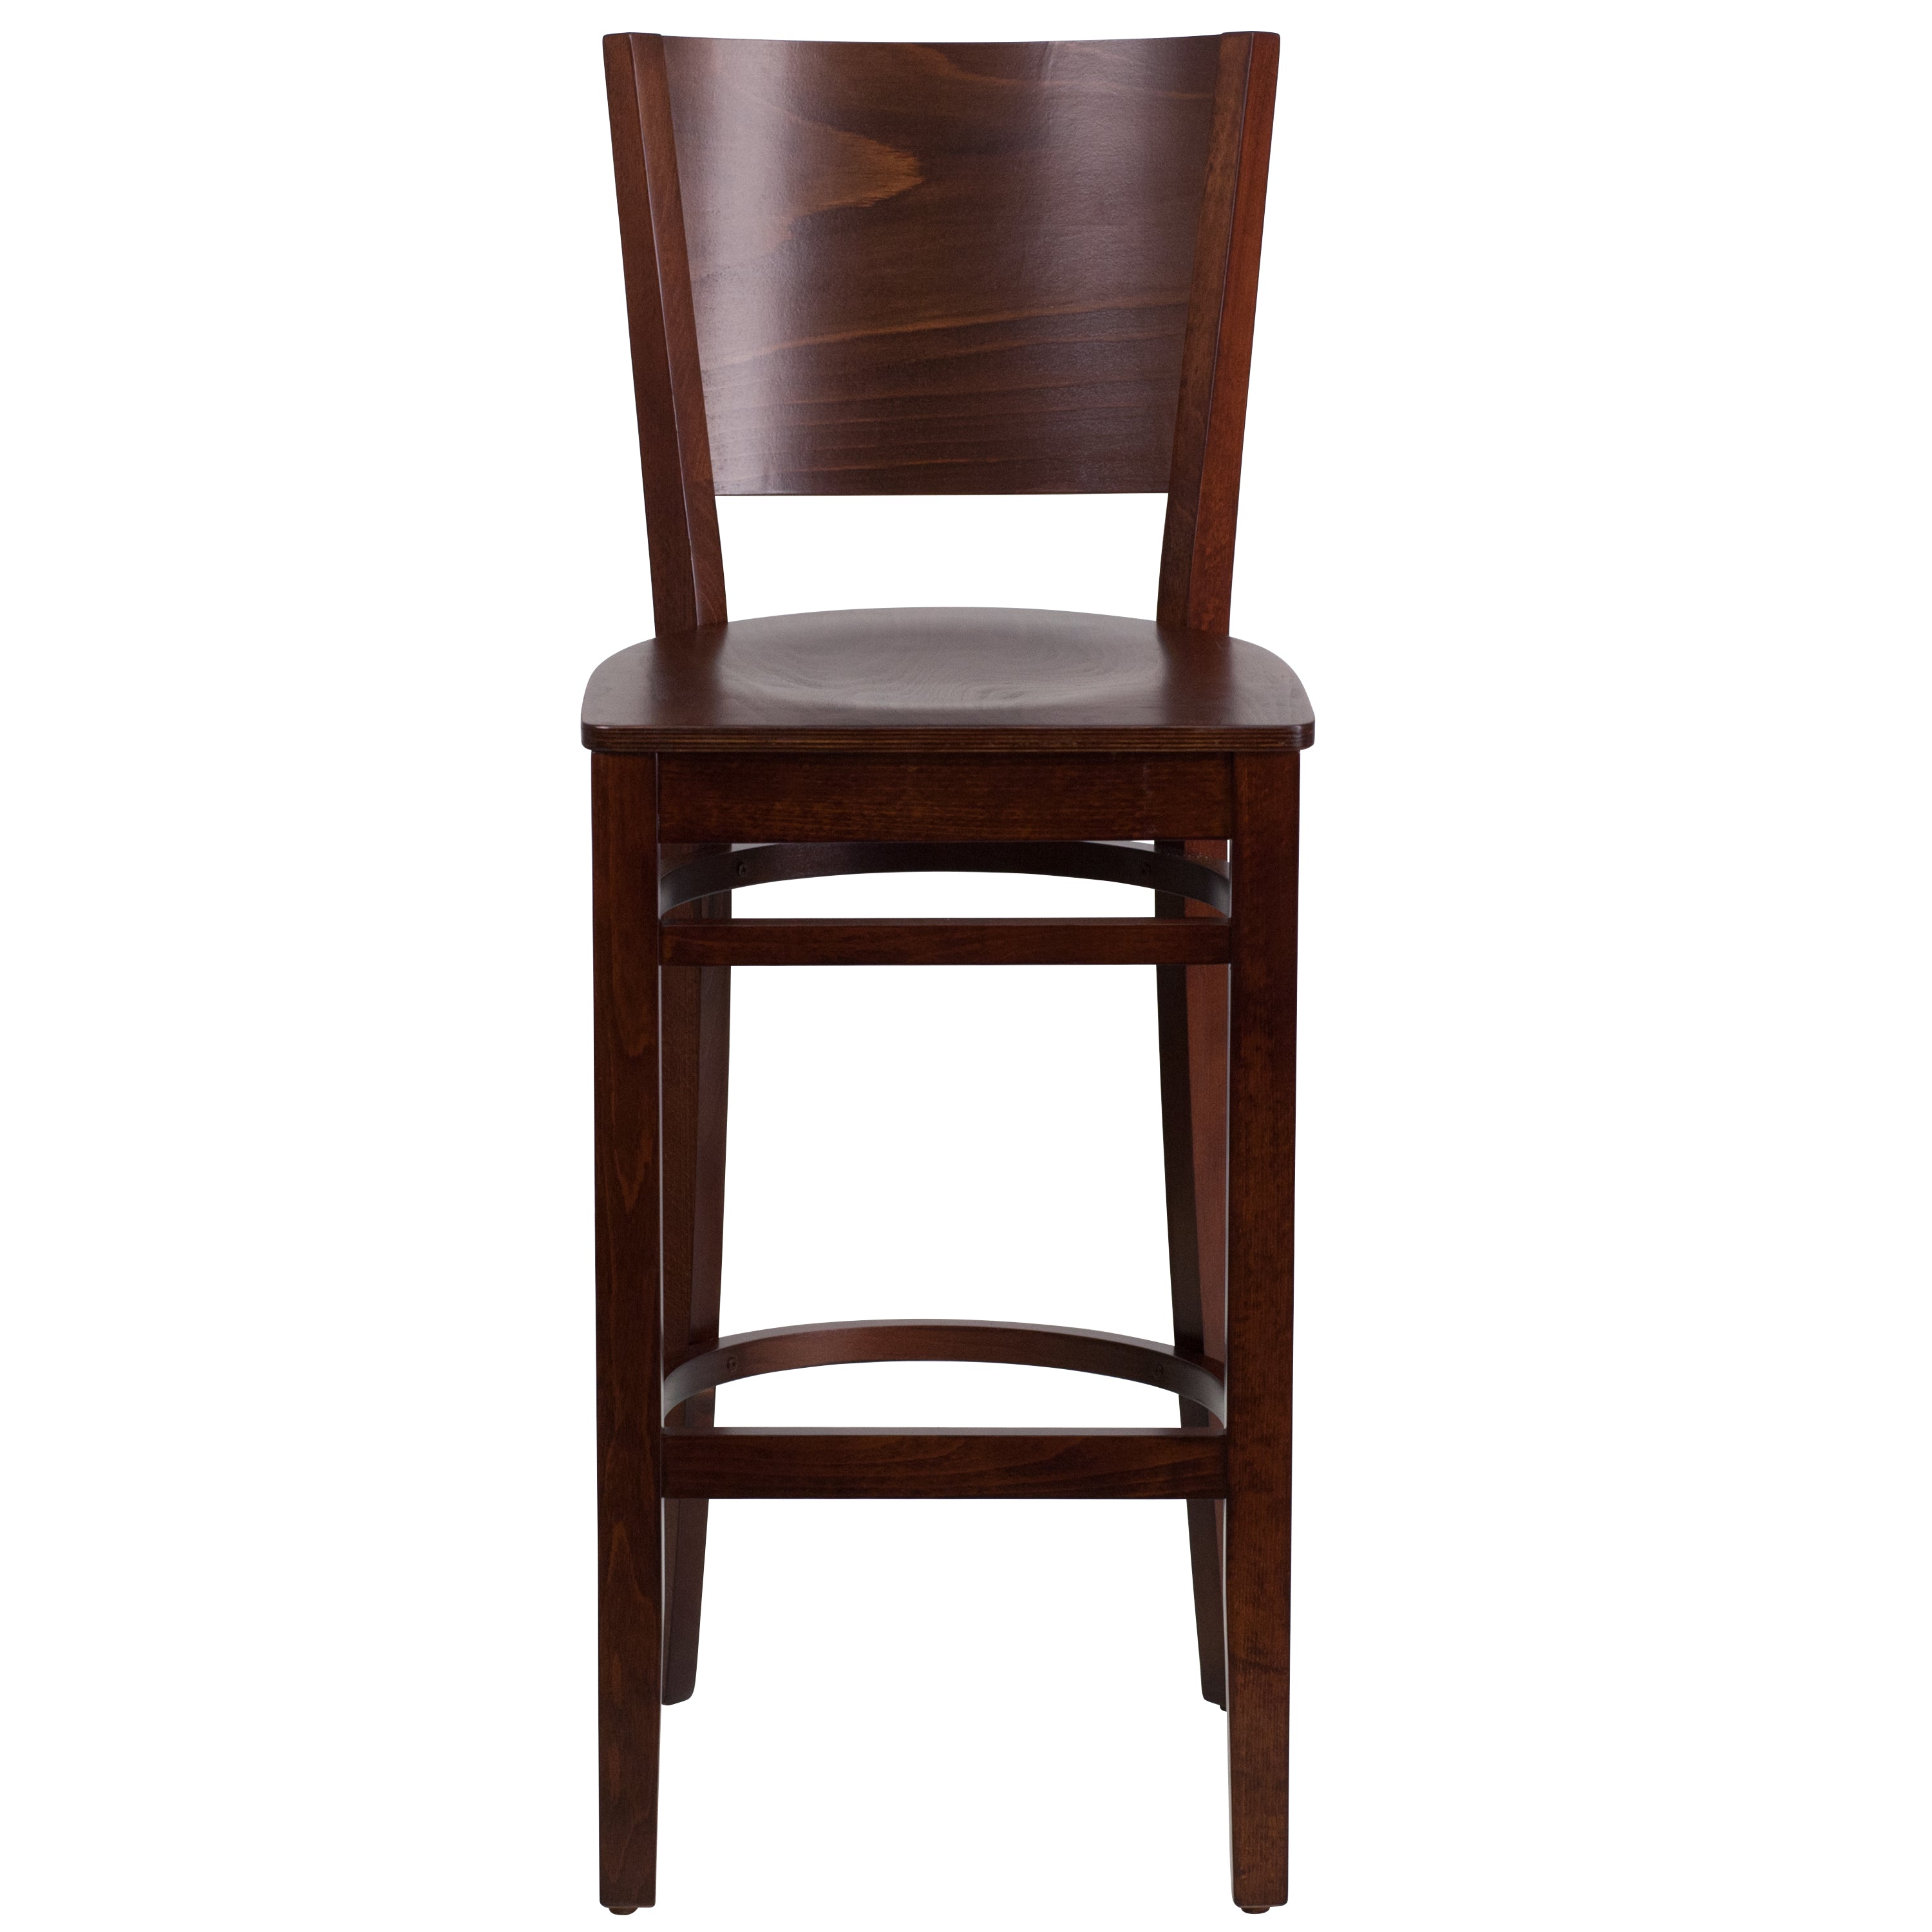 Solid Back Wooden Restaurant Barstool-Restaurant Barstool-Flash Furniture-Wall2Wall Furnishings